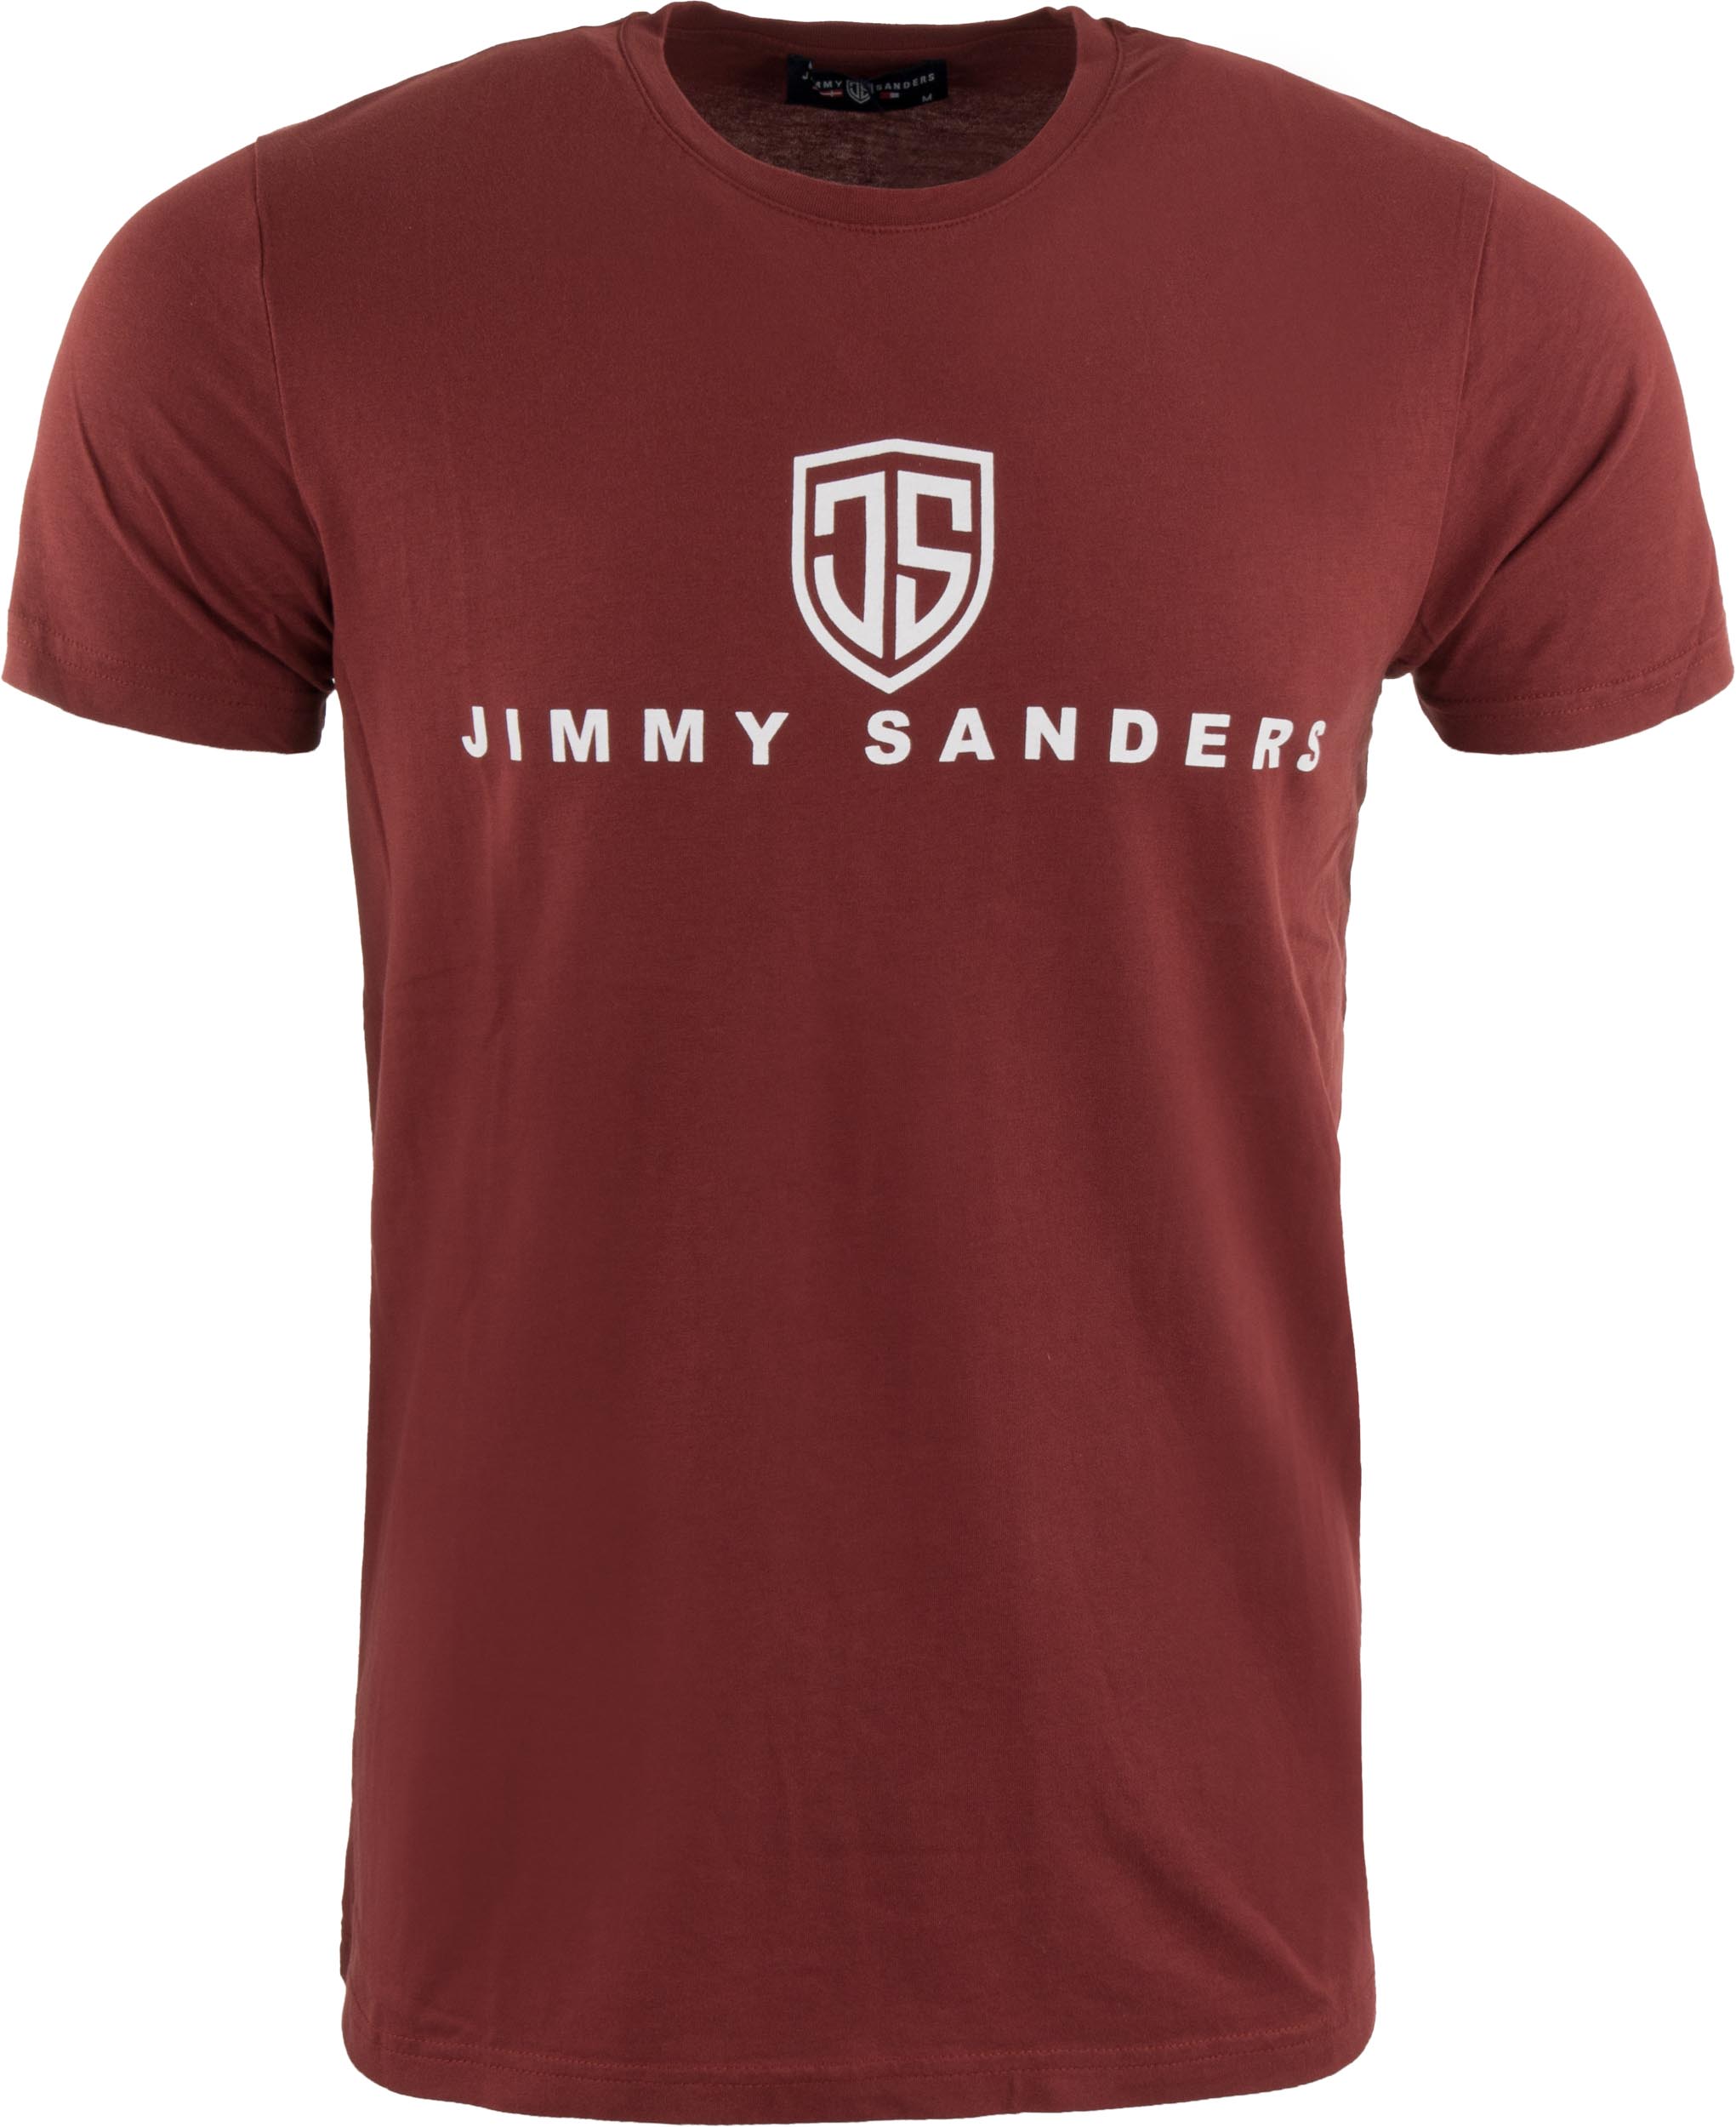 Pánské triko Jimmy Sanders Vadingo Bordeaux Men|M